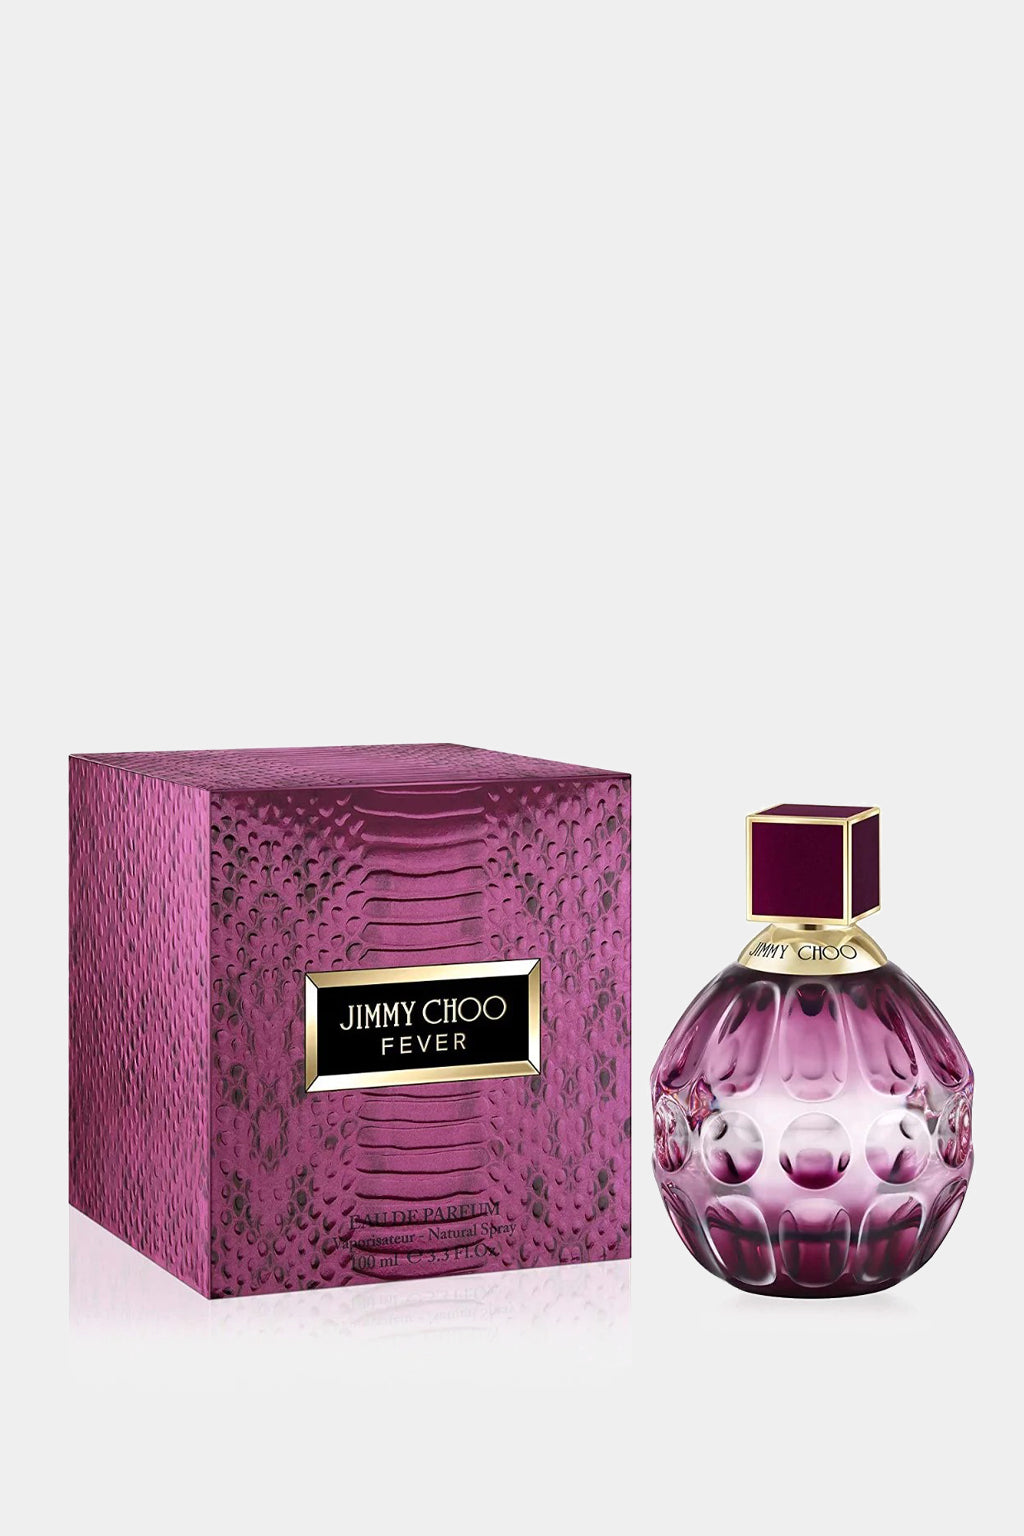 Jimmy Choo - Fever Fragrance Eau de Parfum